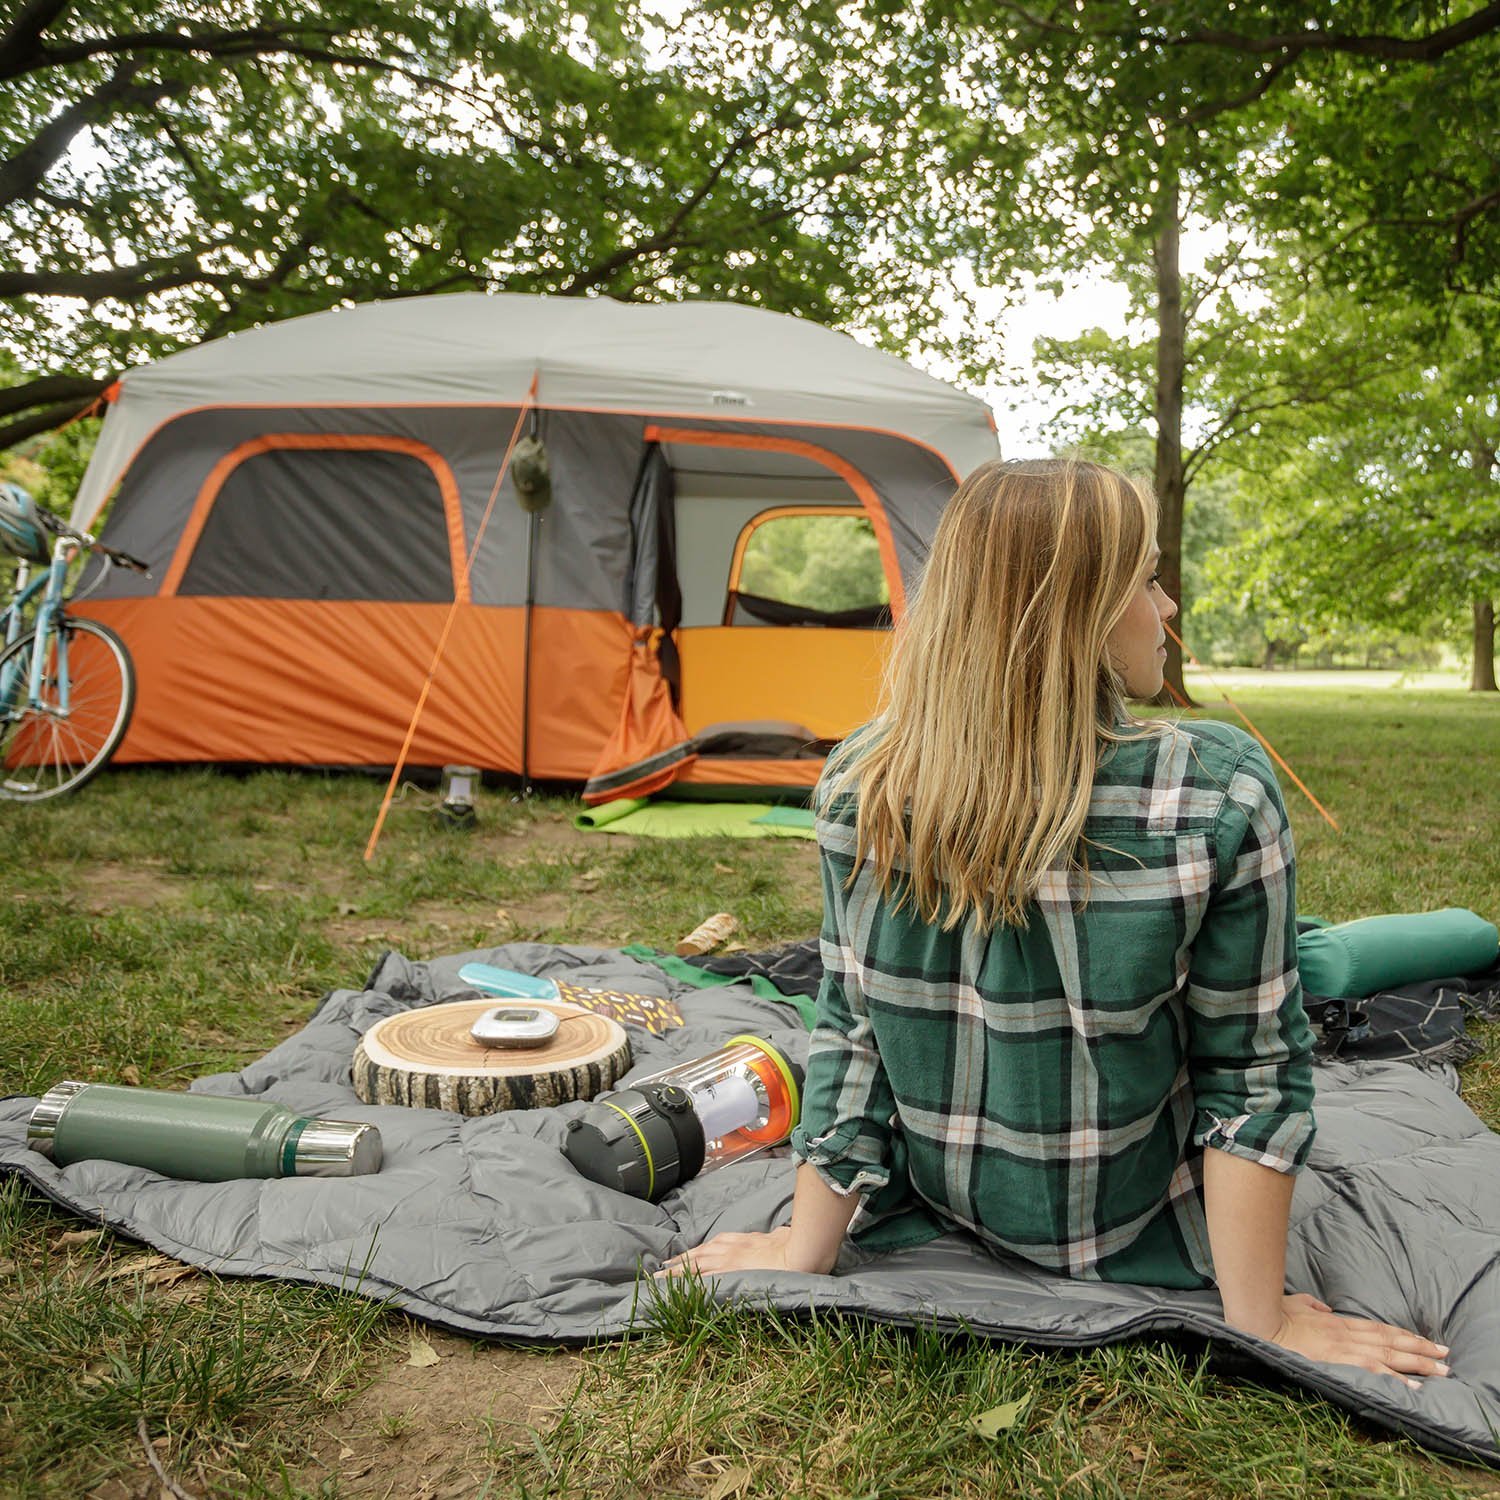 Camping rus. Палатка best Camp Woodford. Палатка best Camp minilight. Палаточный кемпинг. Фотосессия в стиле кемпинг.